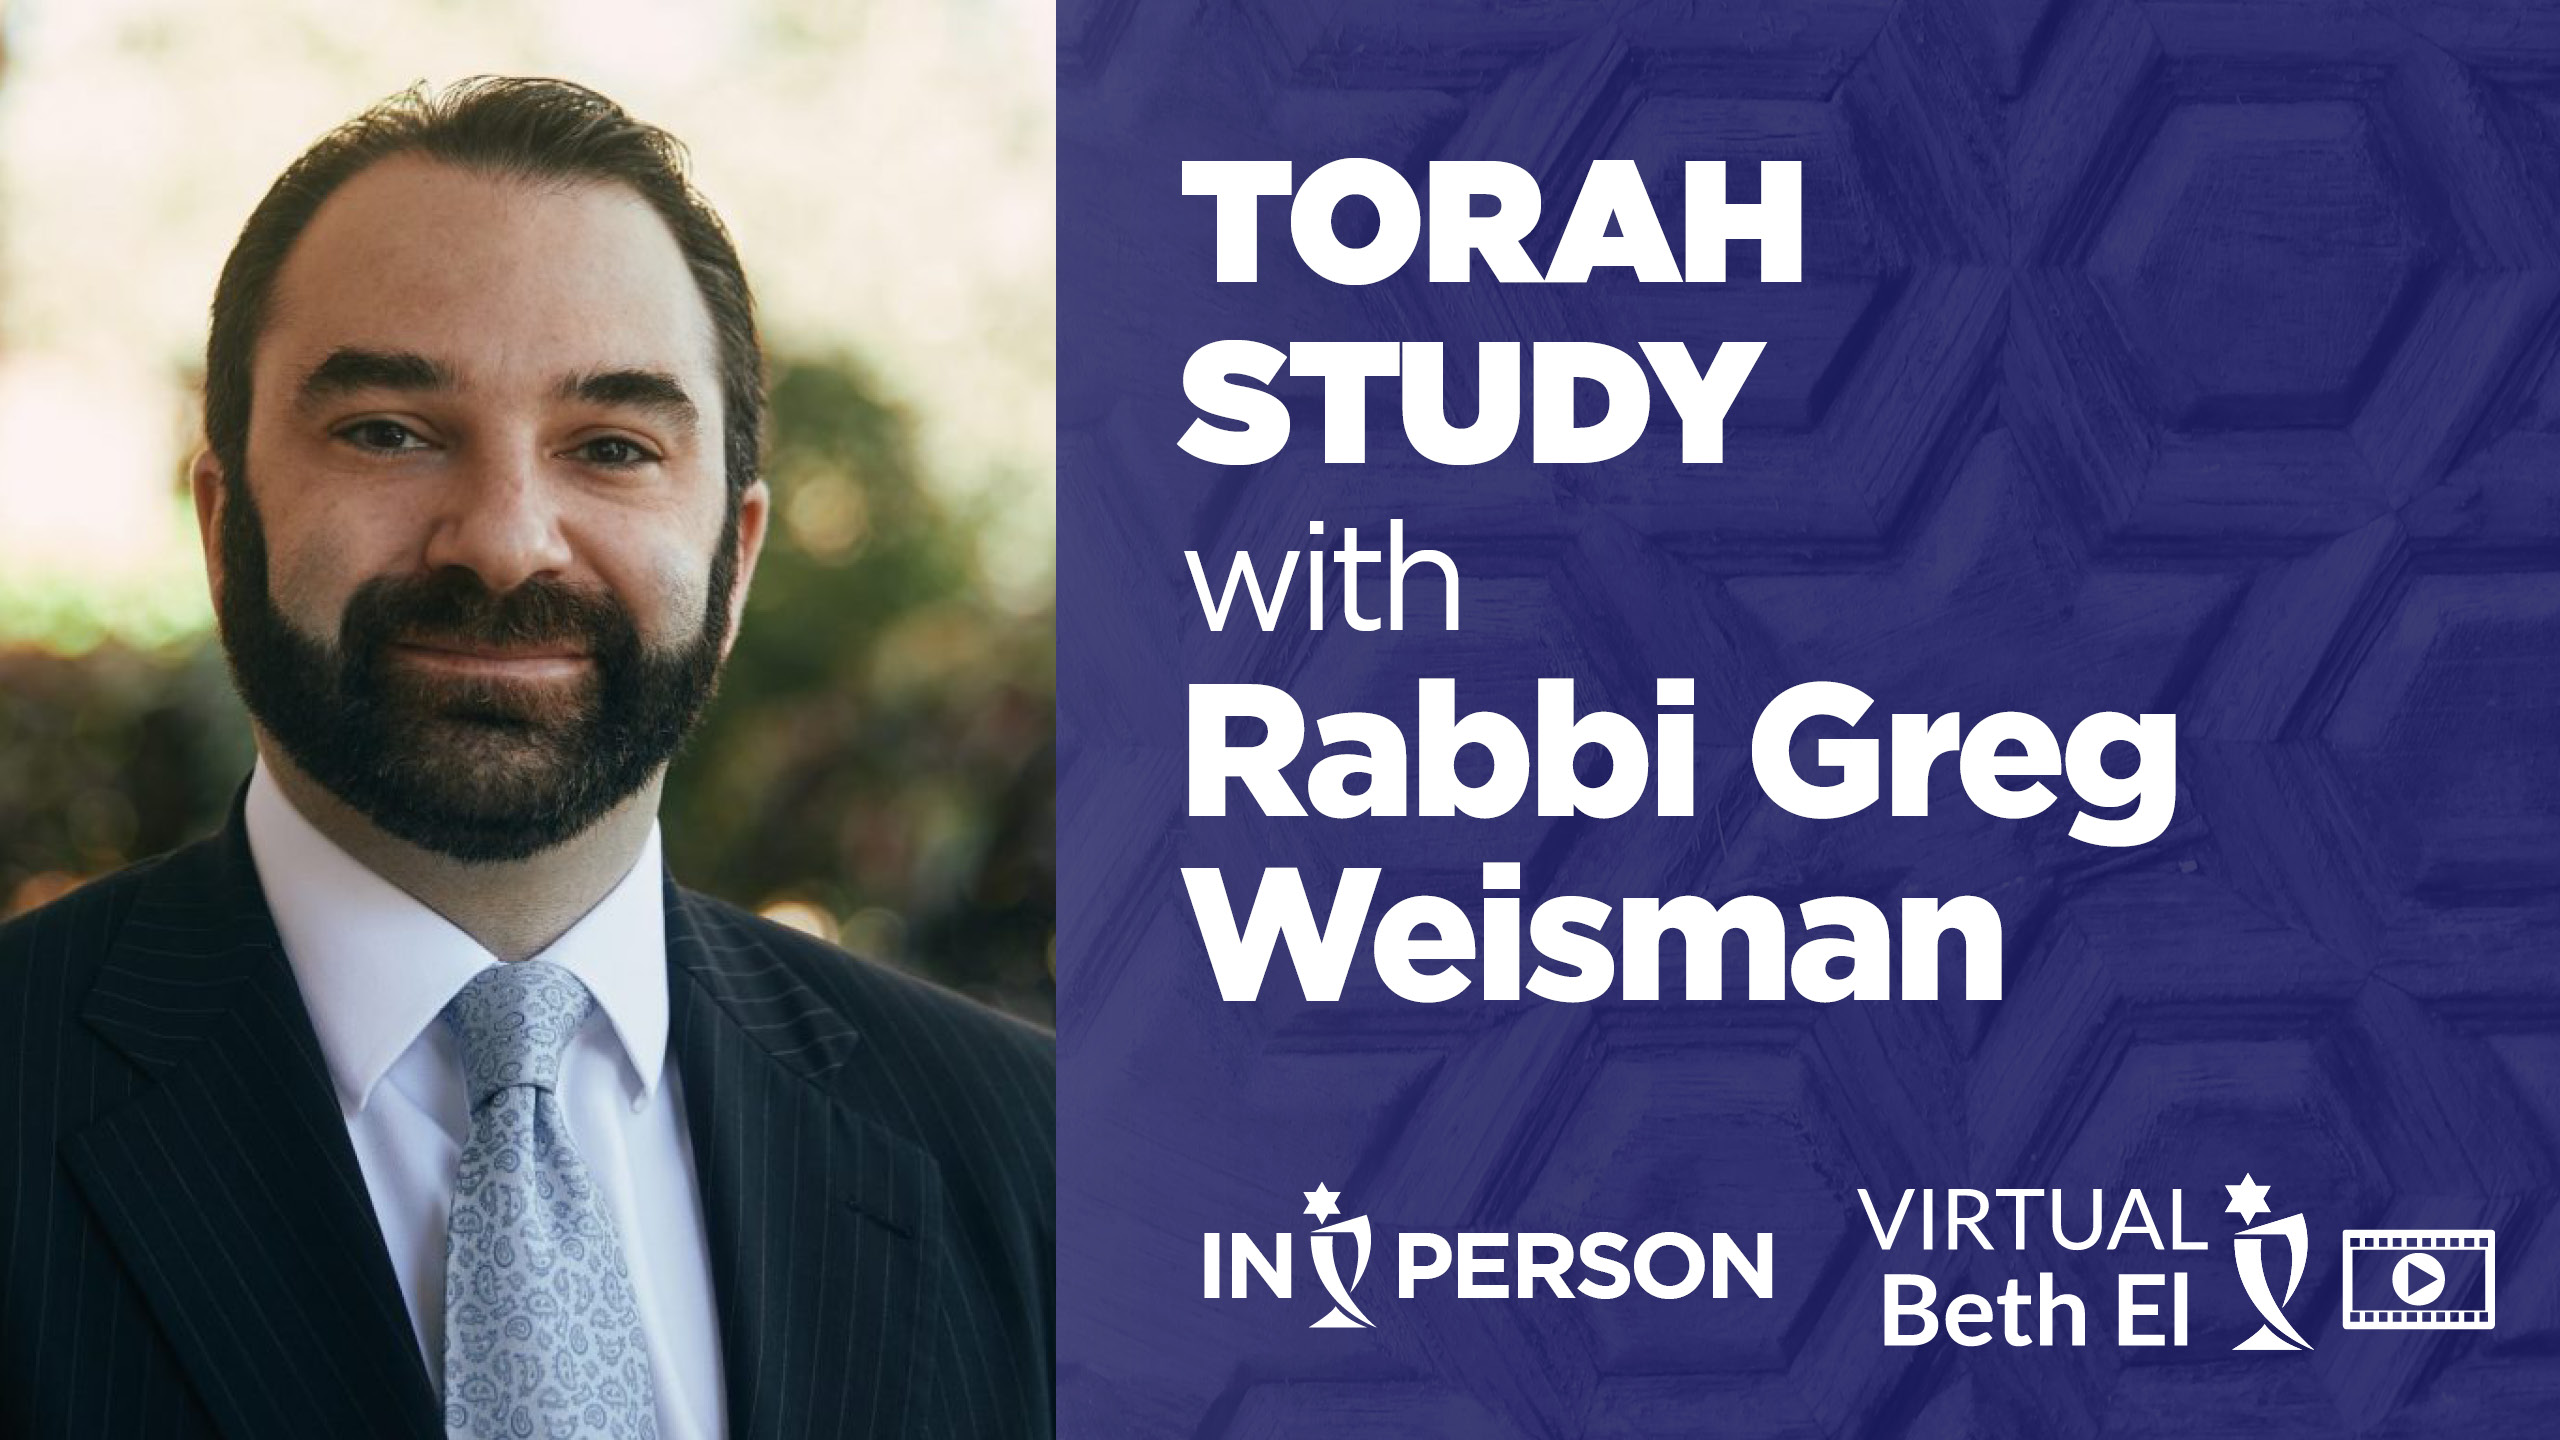 Torah Study with Rabbi Greg Weisman event graphic for Temple Beth El of Boca Raton